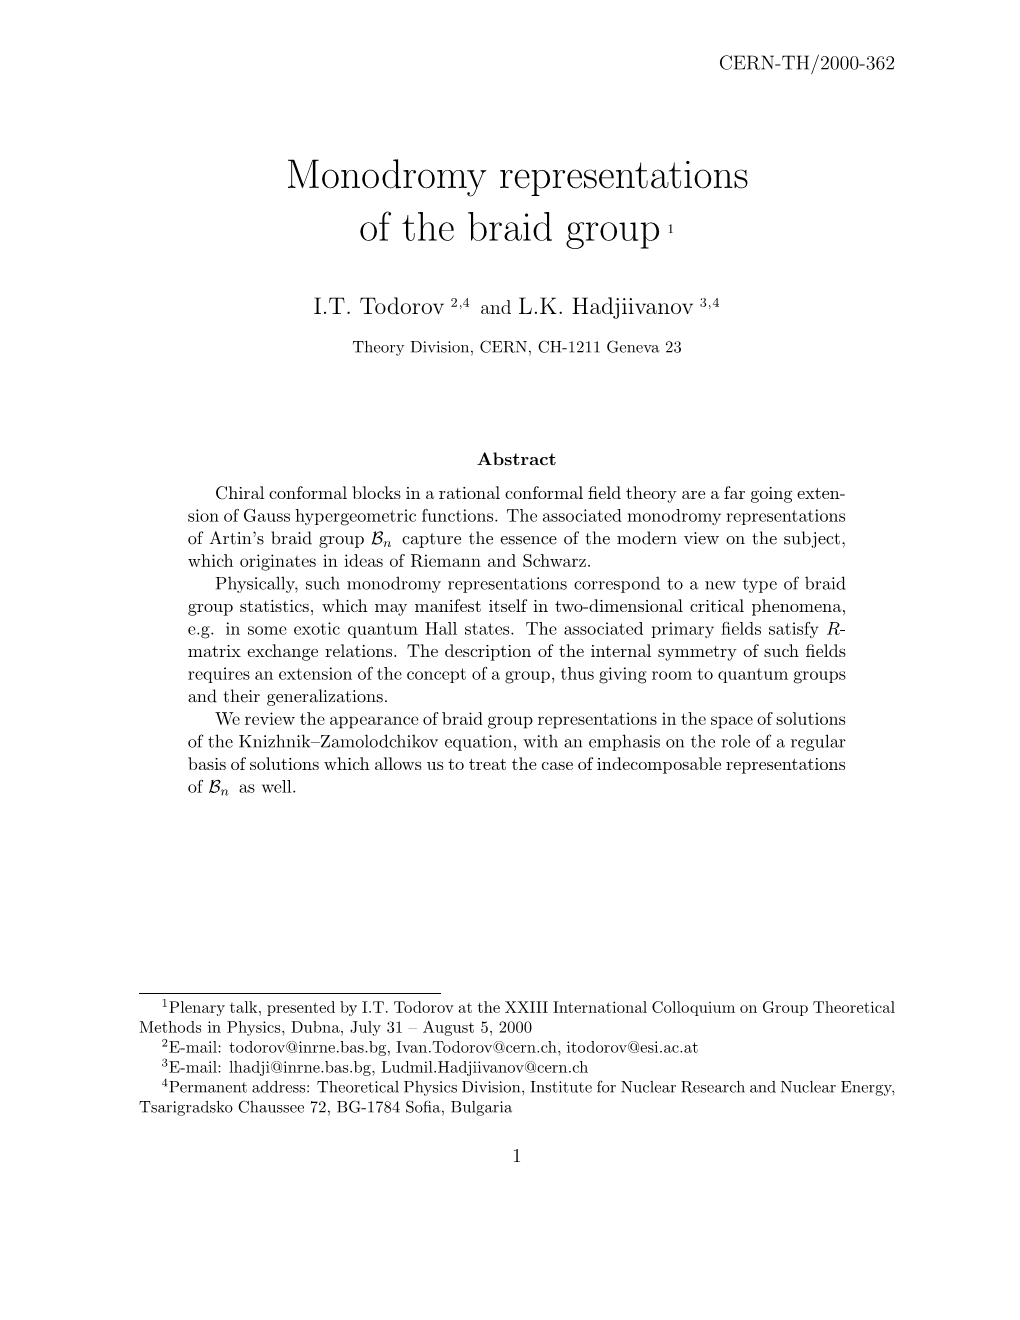 Monodromy Representations of the Braid Group1